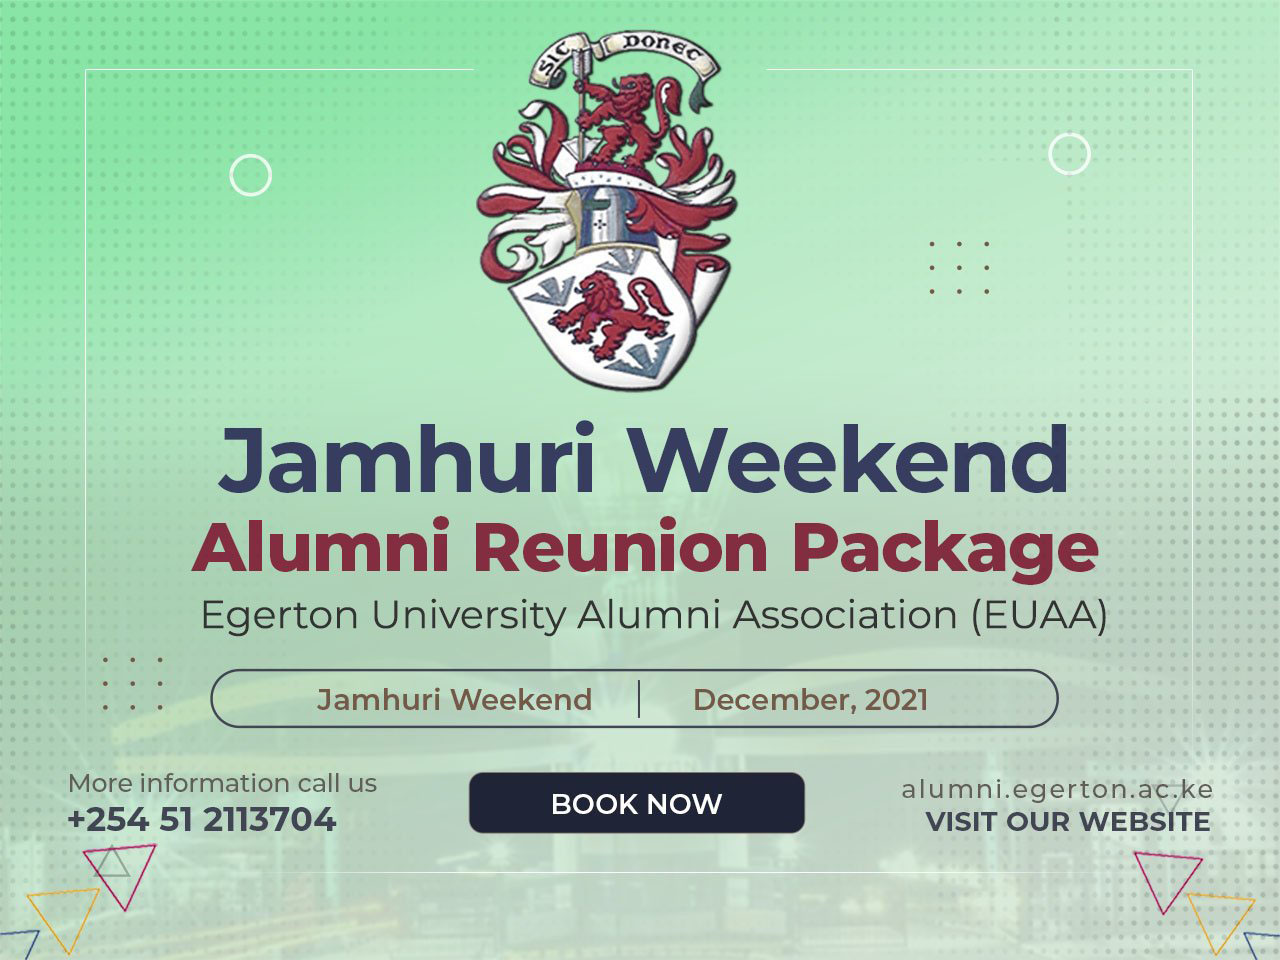 Jamhuri Weekend Reunion Package for Egerton University Alumni